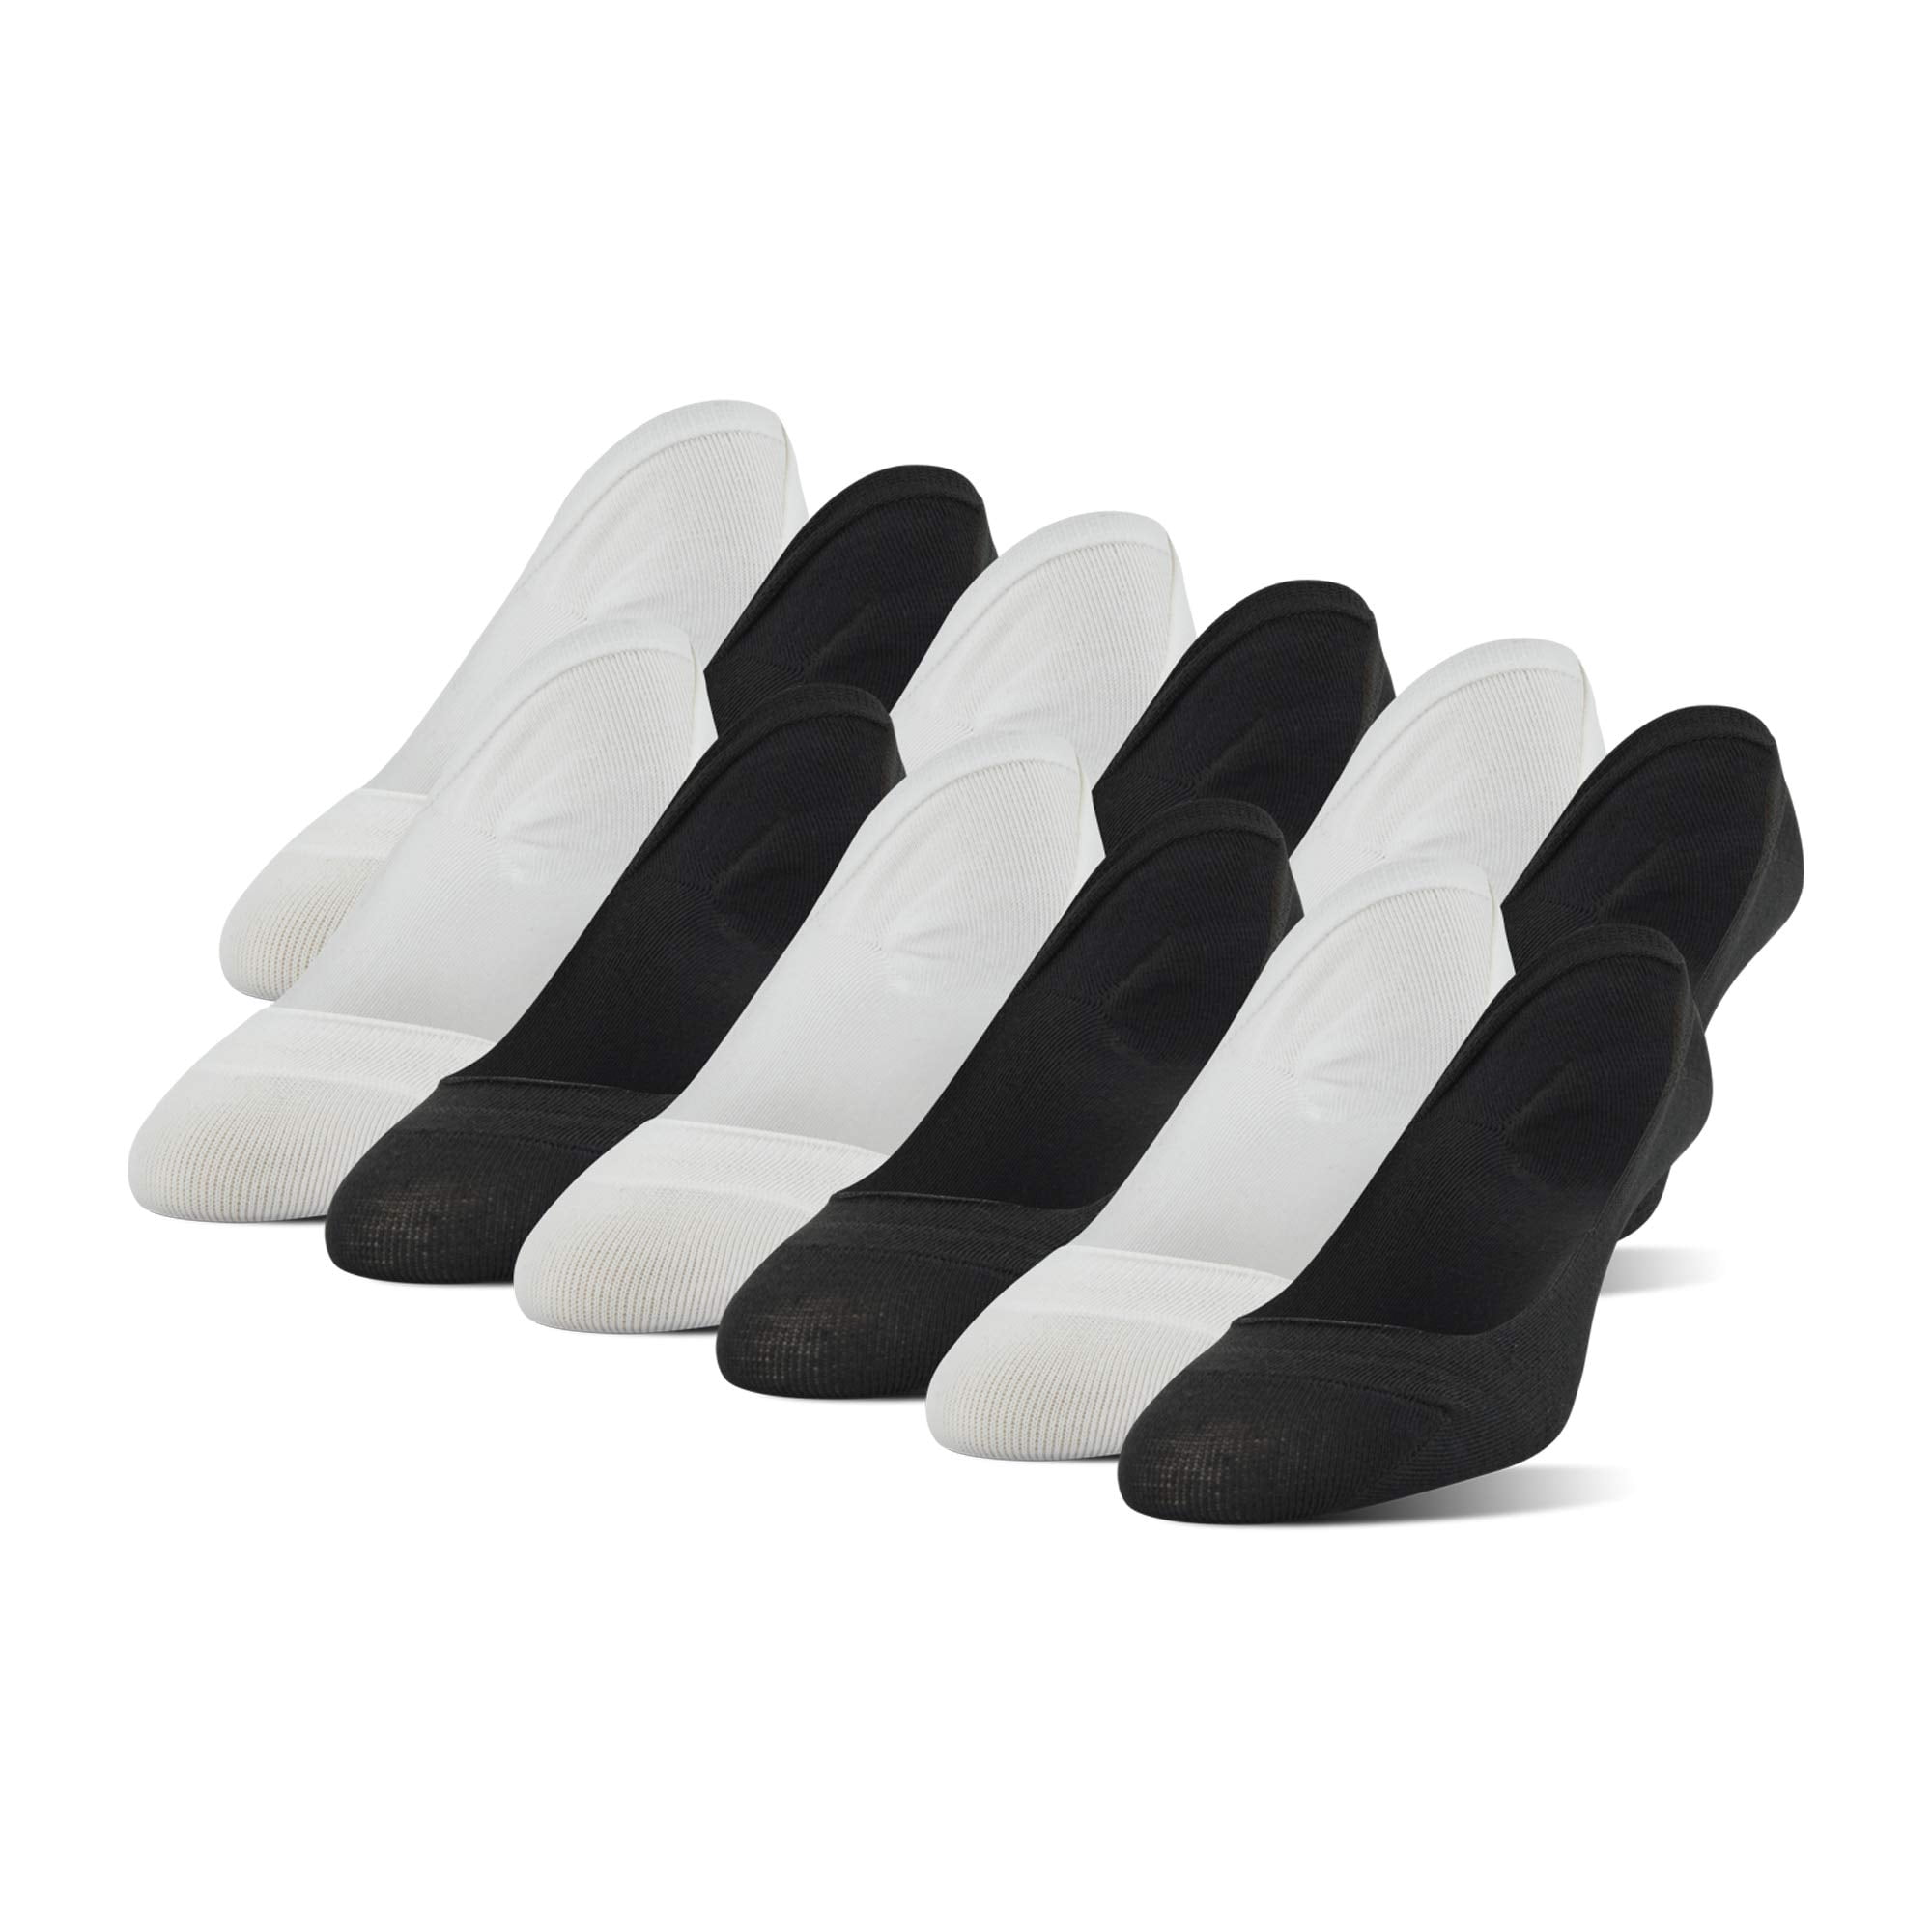 PEDS Women's Mesh Stripe Low Cut No Show Socks, 12 Pairs, Black/White ...